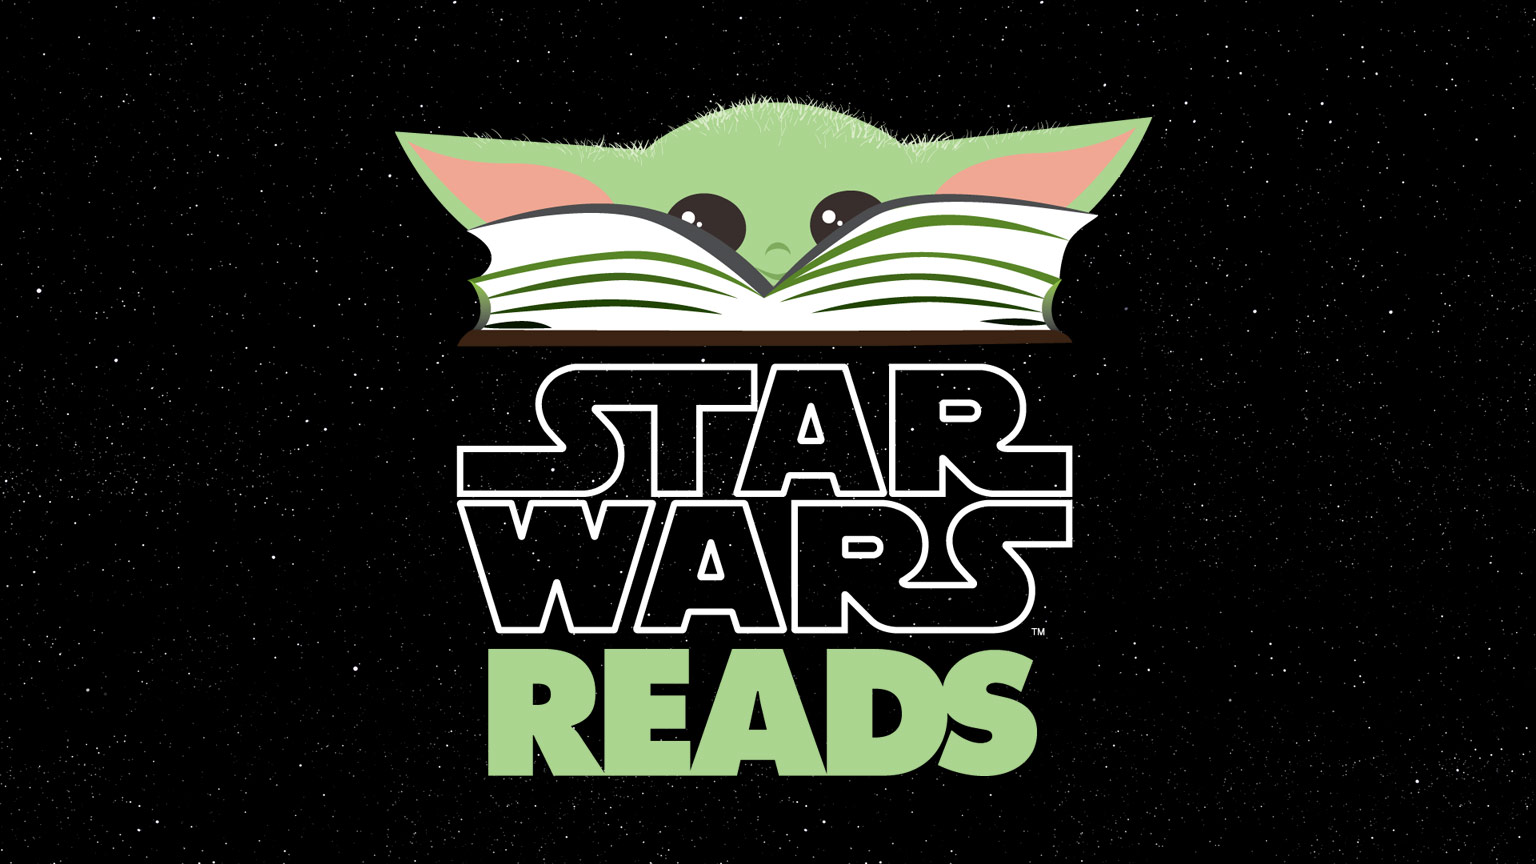 Star Wars Read Logo with Grogu